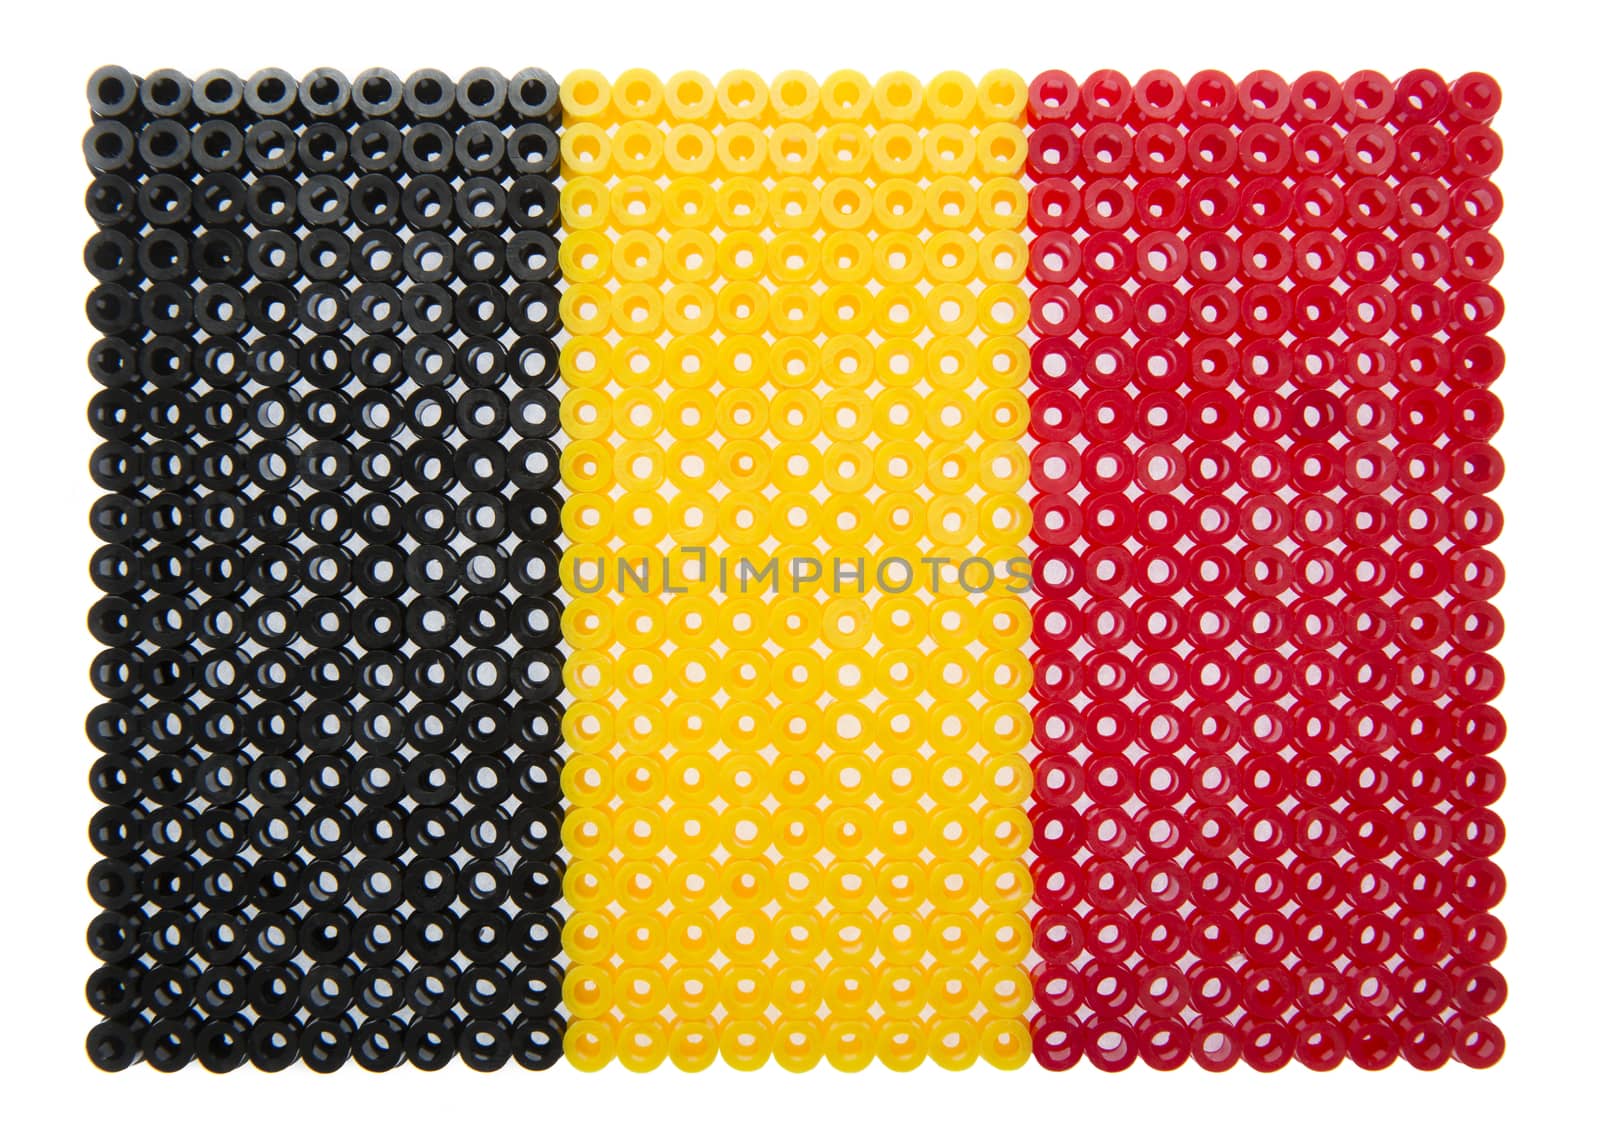 Belgian Flag by gemenacom